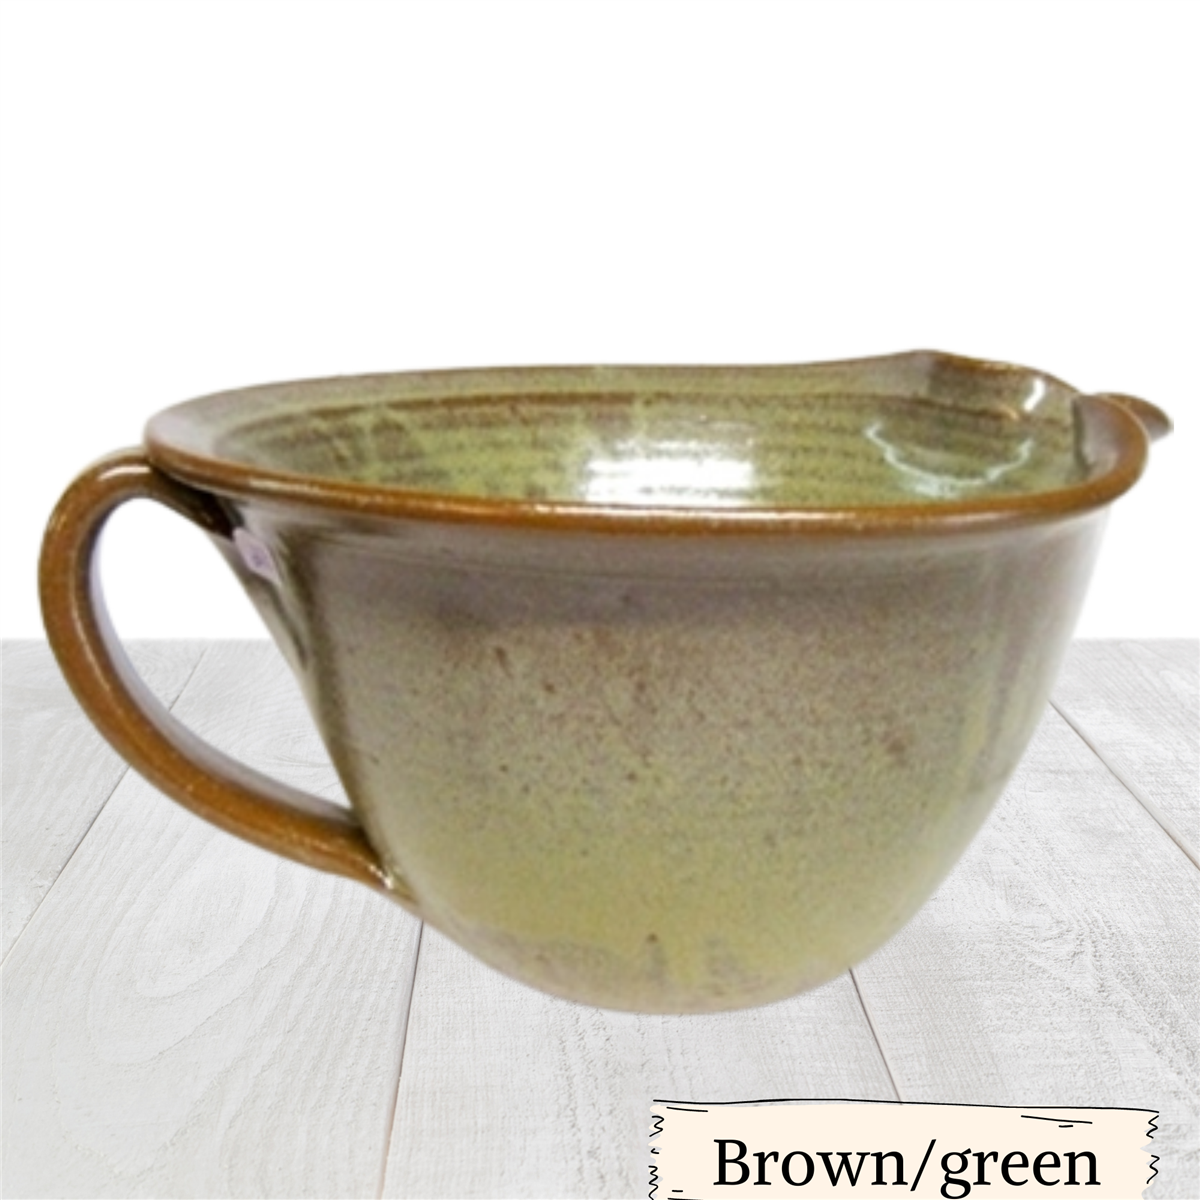 Large batter, mixing bowl, with handle. Pancake bowl handmade pottery.  Ceramic large bowl with pour spout